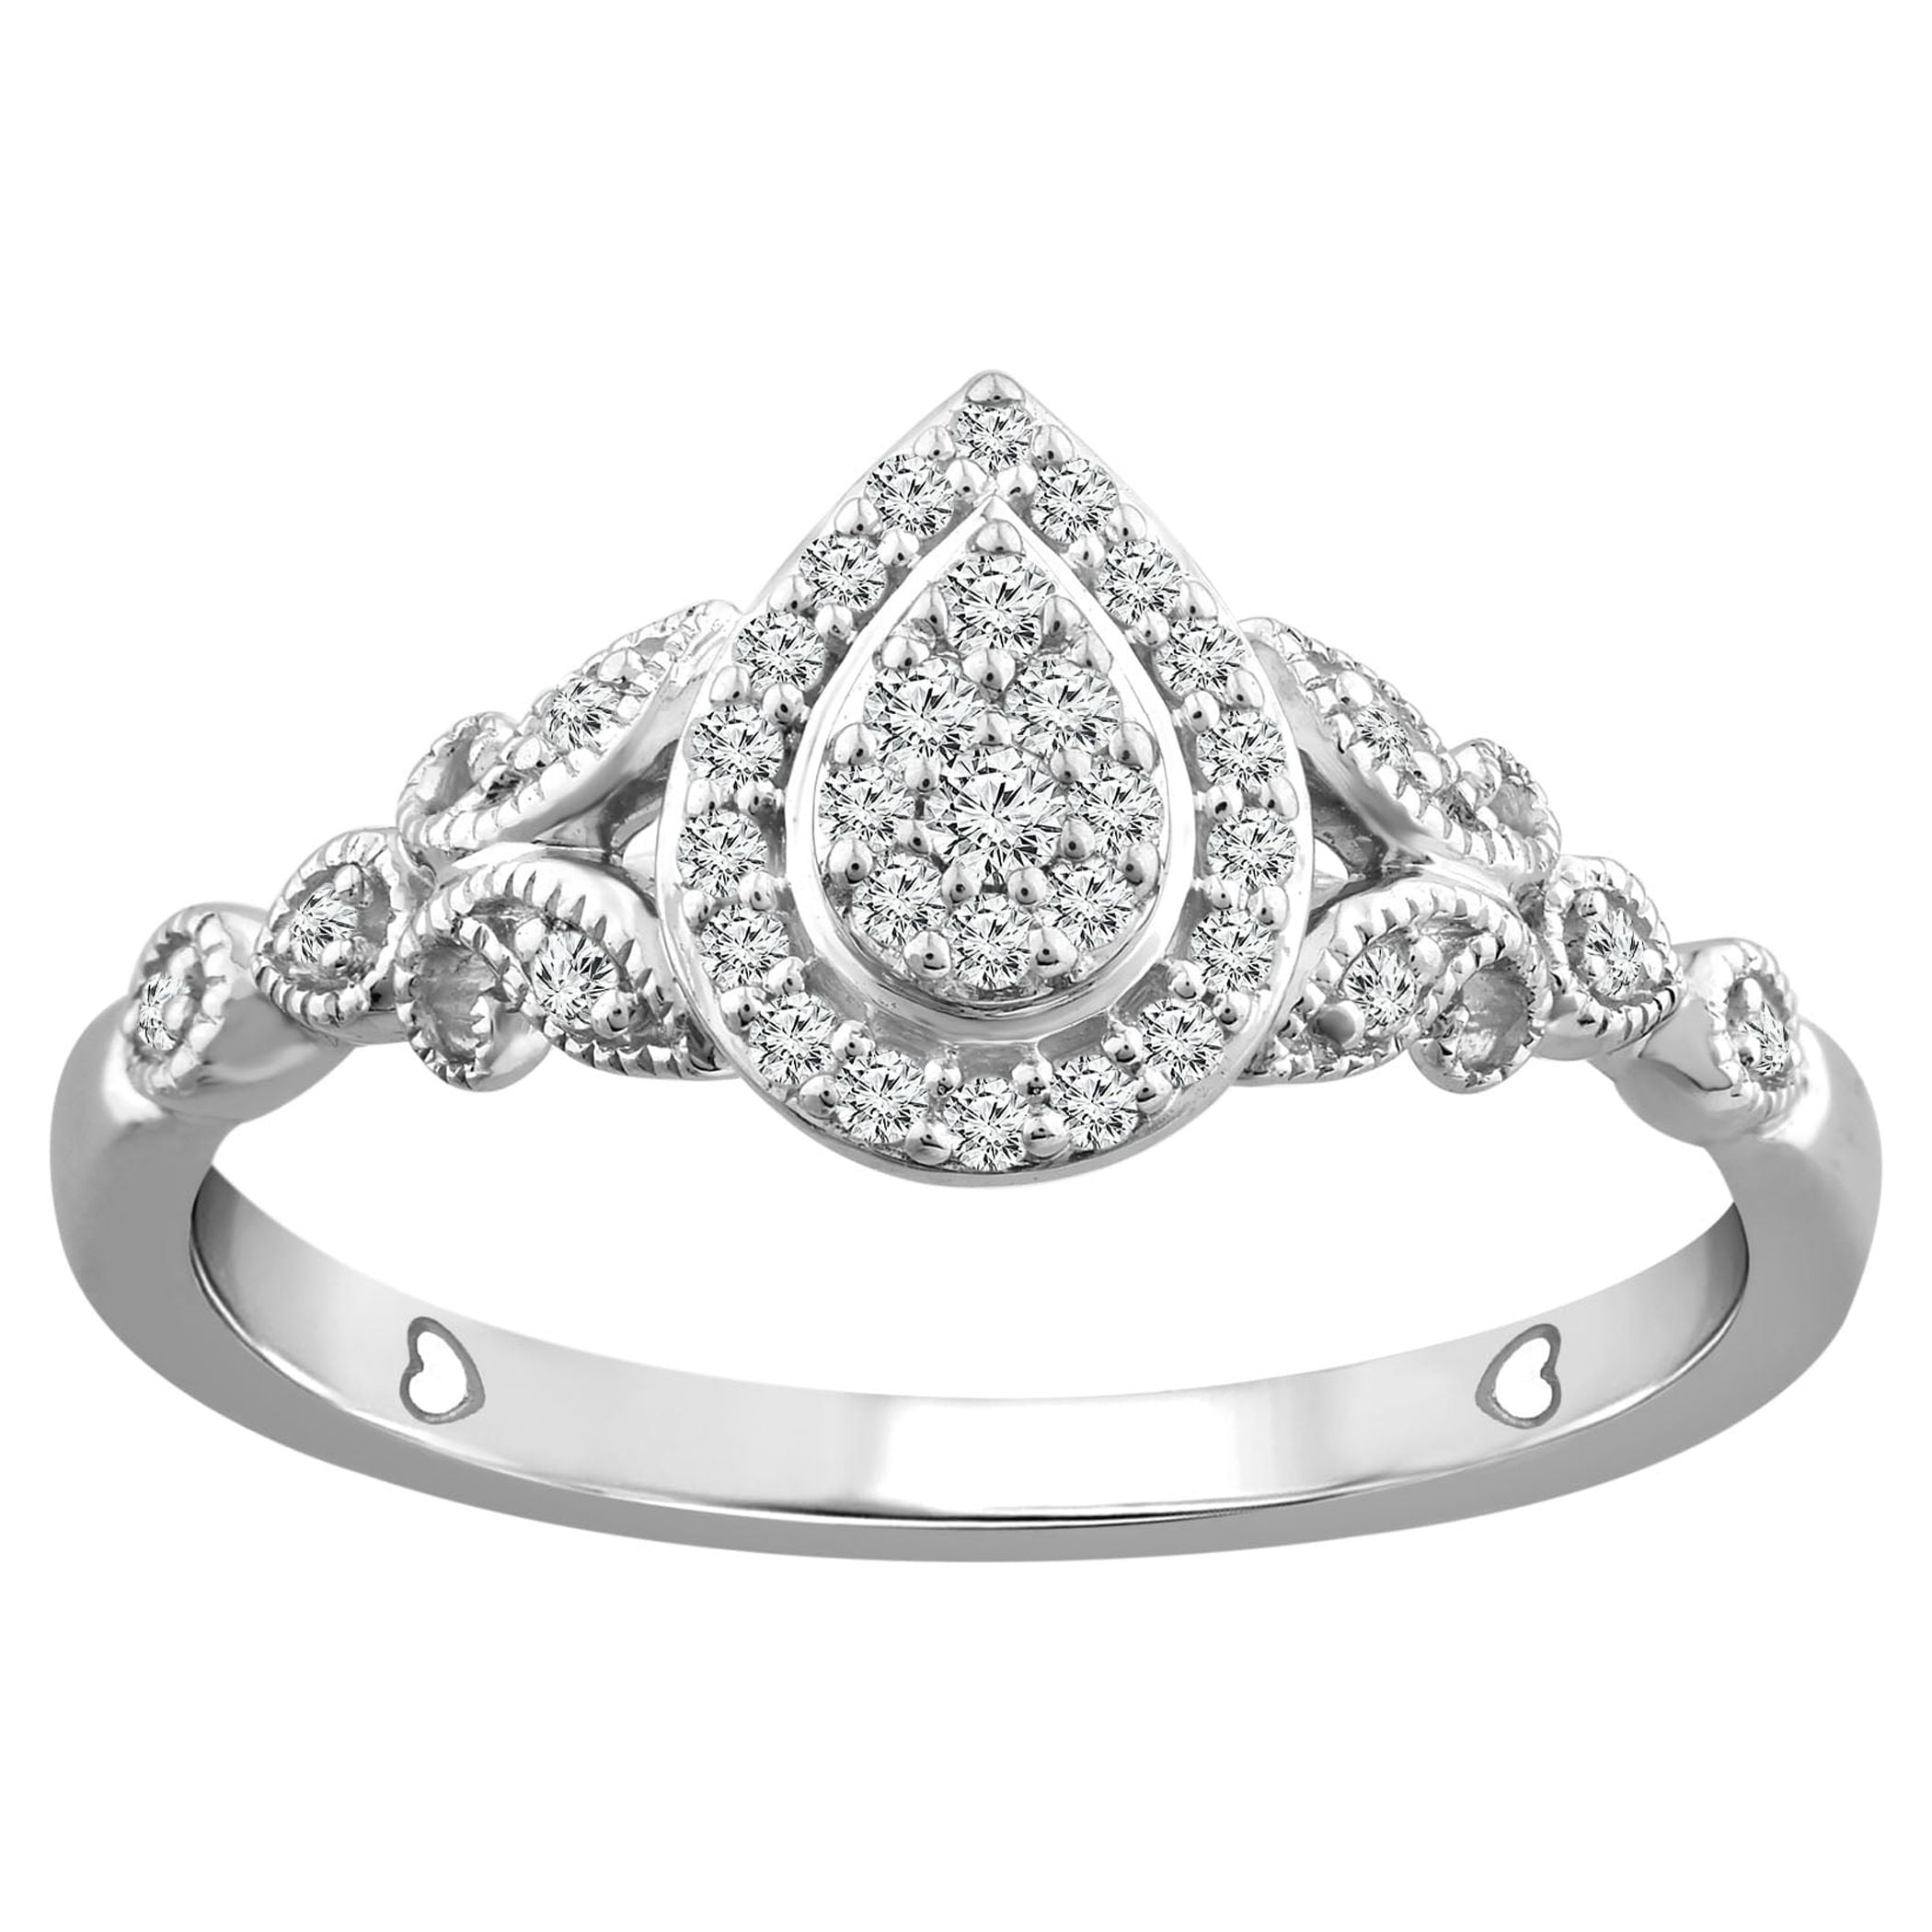 Color of Love 1 5 Carat T W Diamond Promise Ring in 10K White Gold I J I3 91ec7663 f9f5 4813 a7a6 f30c7b316f69.ed4434a5db45fb7b9ca35f20d007ceca